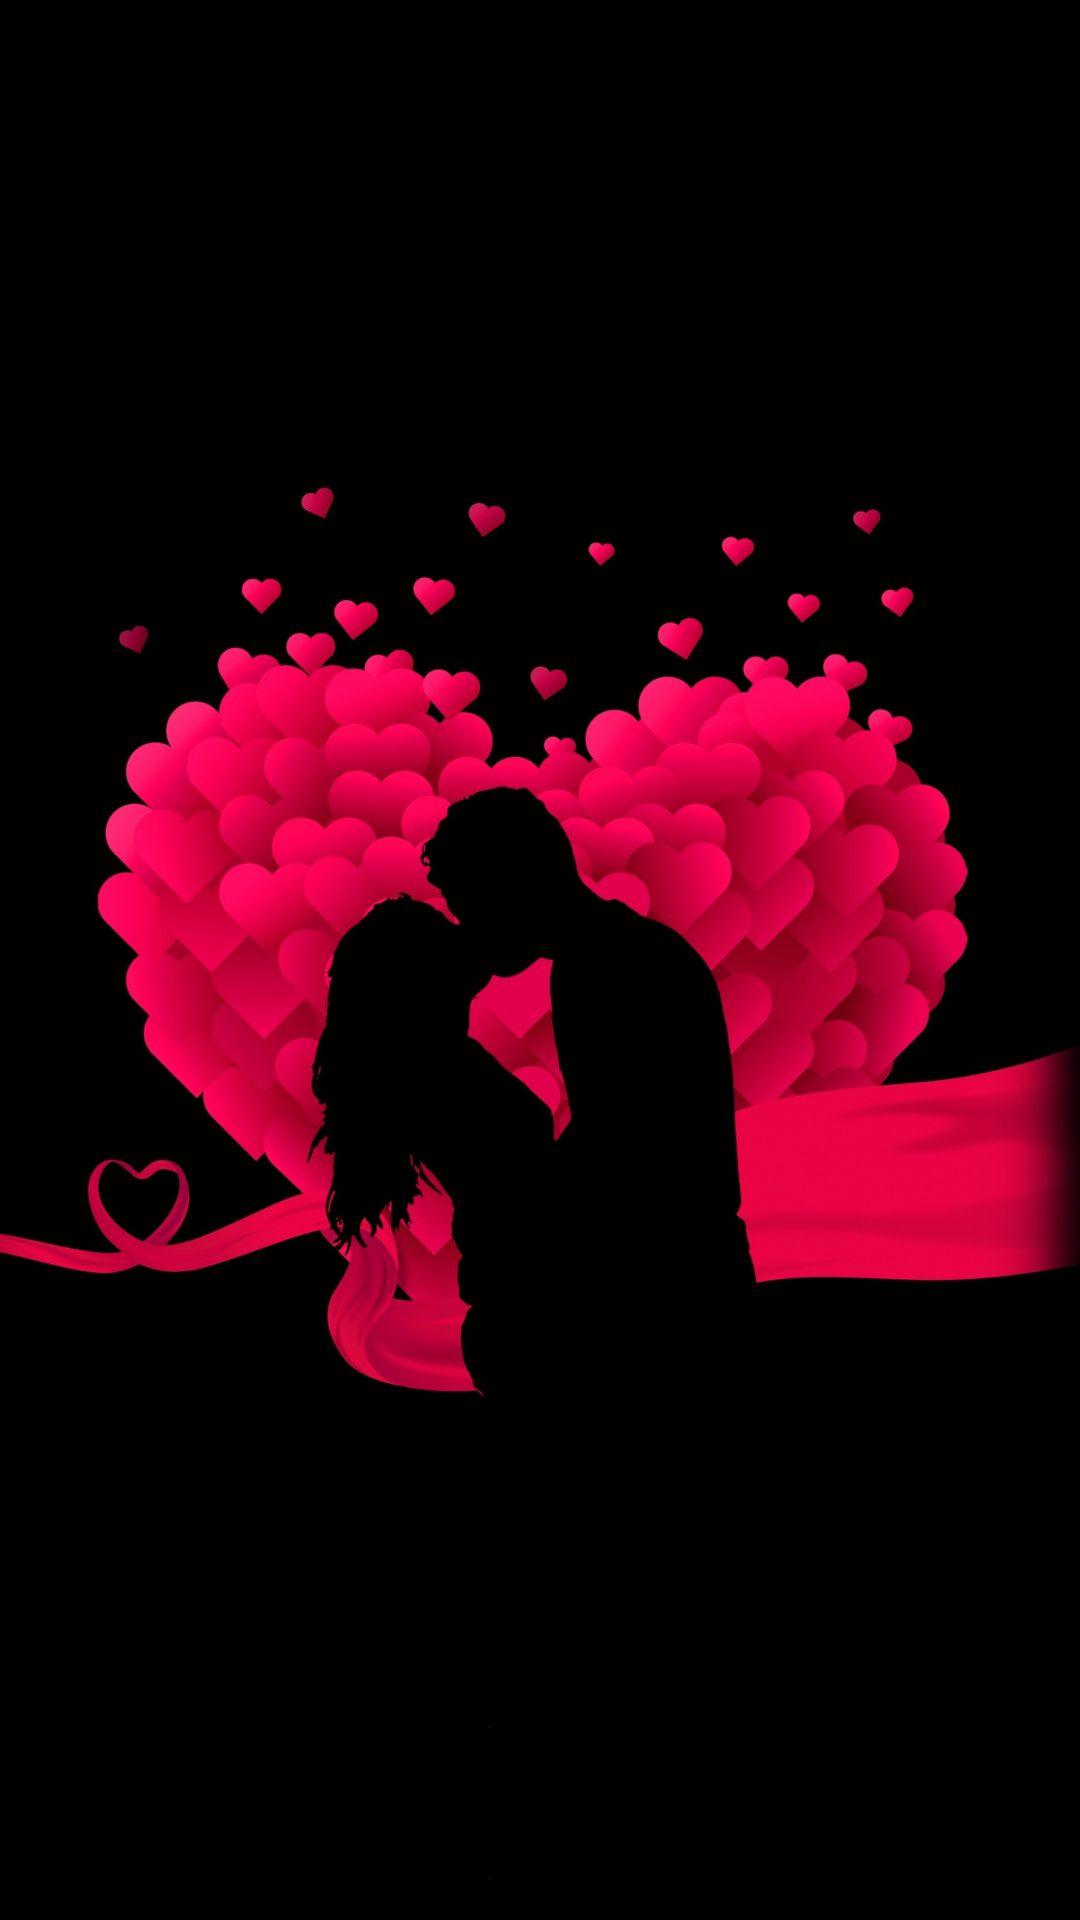 Couple, heart, love, minimal, kiss, silhouette, art, 1080x1920 wallpaper. Love heart image, Love wallpaper romantic, Love image